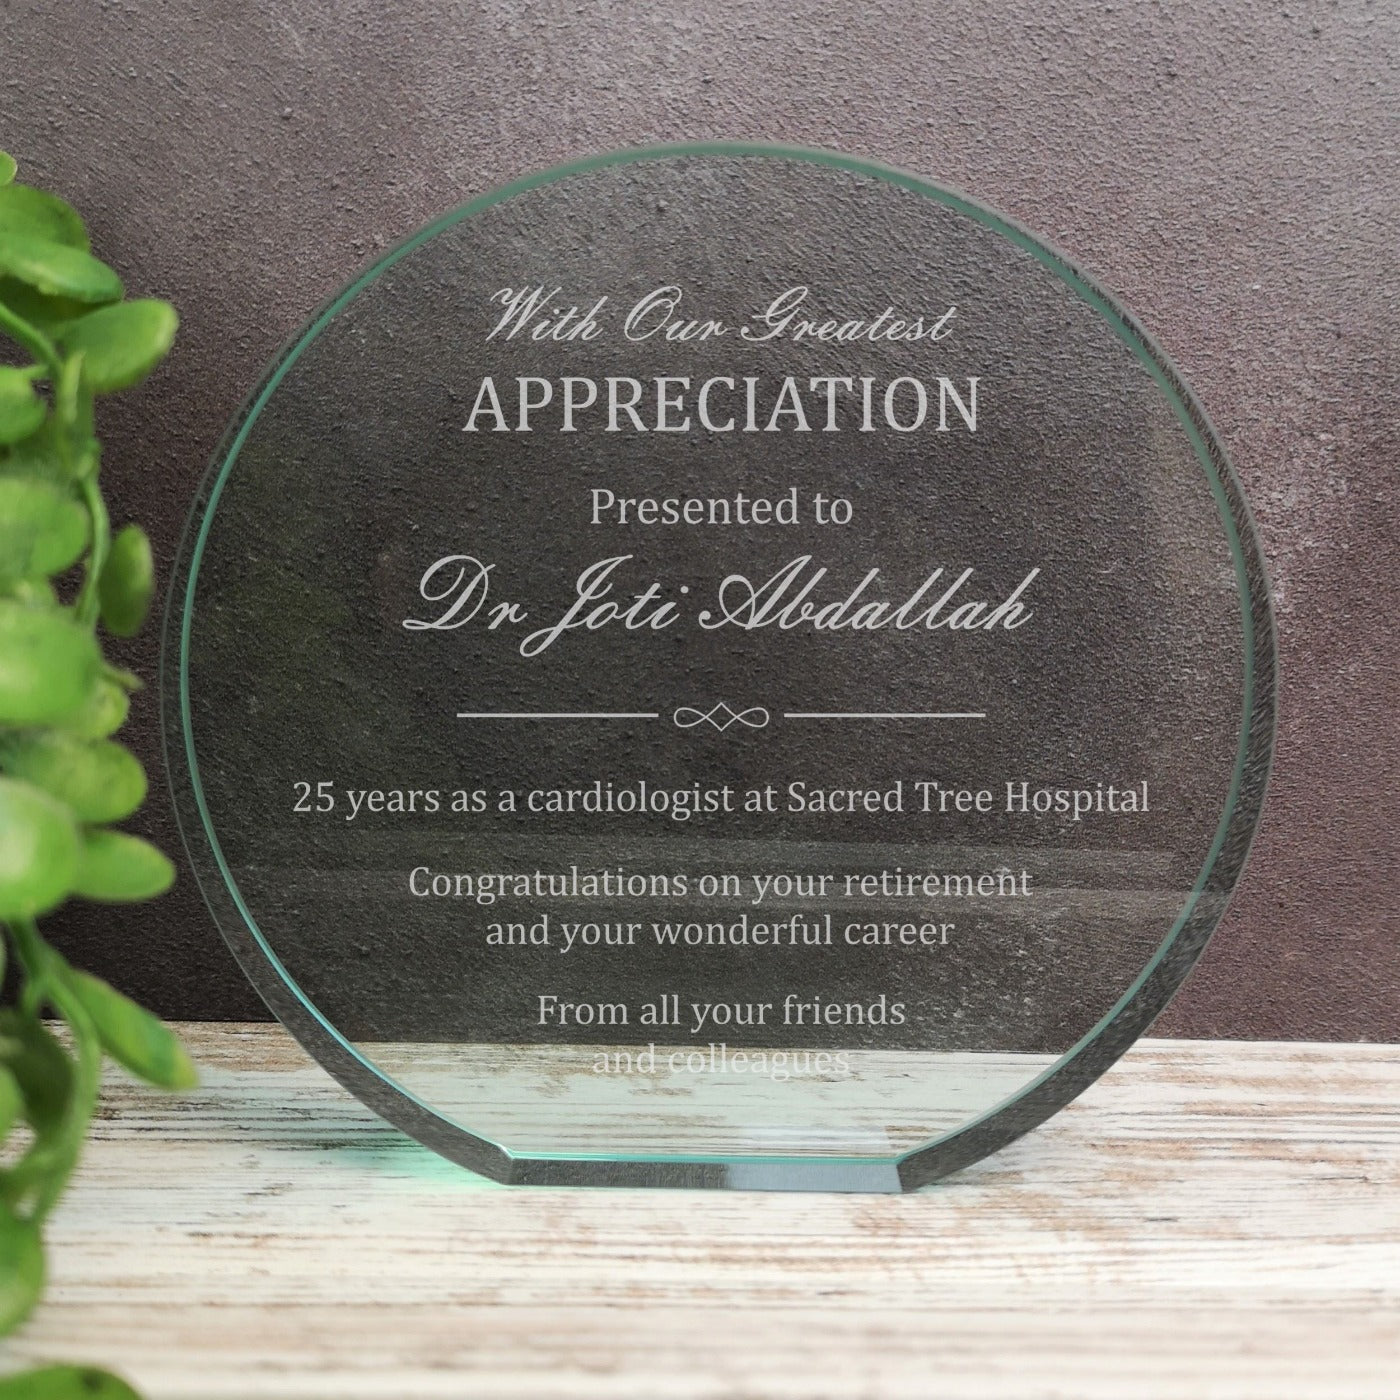 Poppy Jade Glass Long Service Appreciation Award